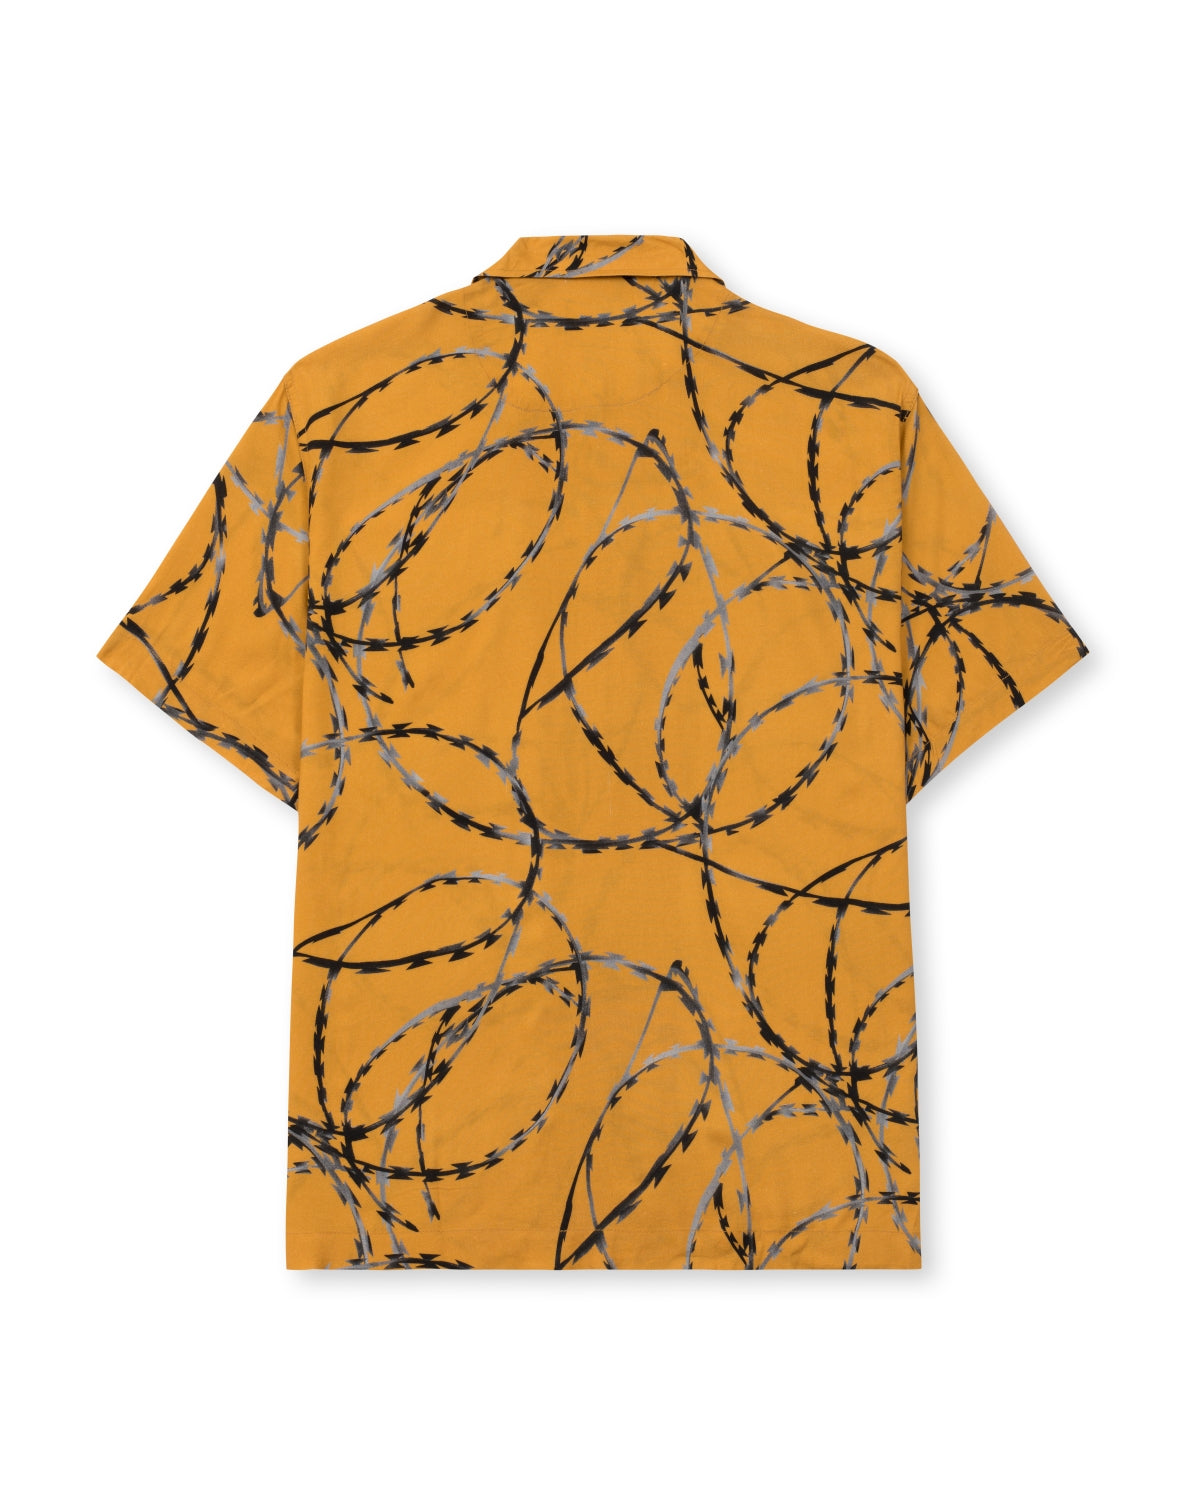 Razorwire Rayon Shirt - Orange 2